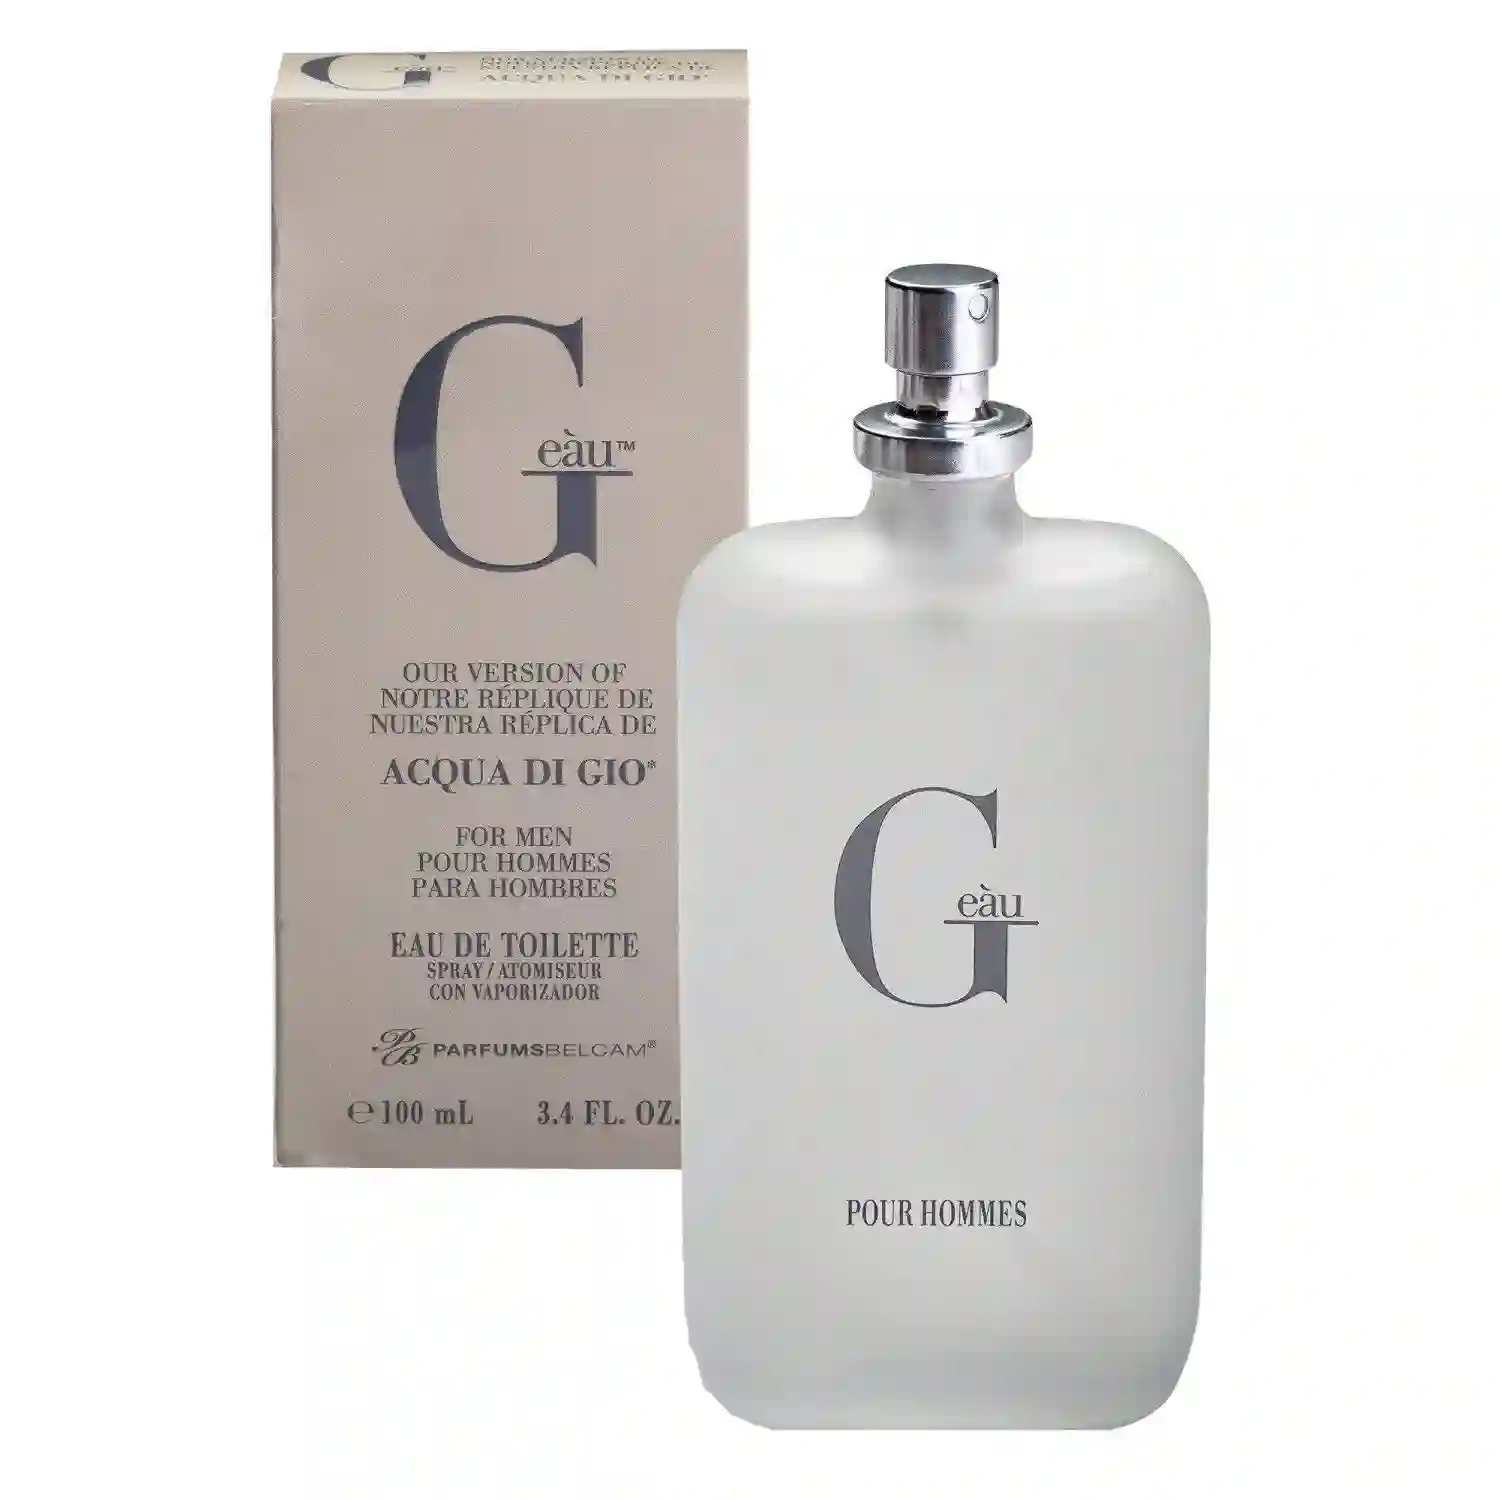 Pb Parfums Belcam G Eau Version Of Acqua Di Gio Eau De Toilette Spray For Men, 3.4 Fluid Ounce